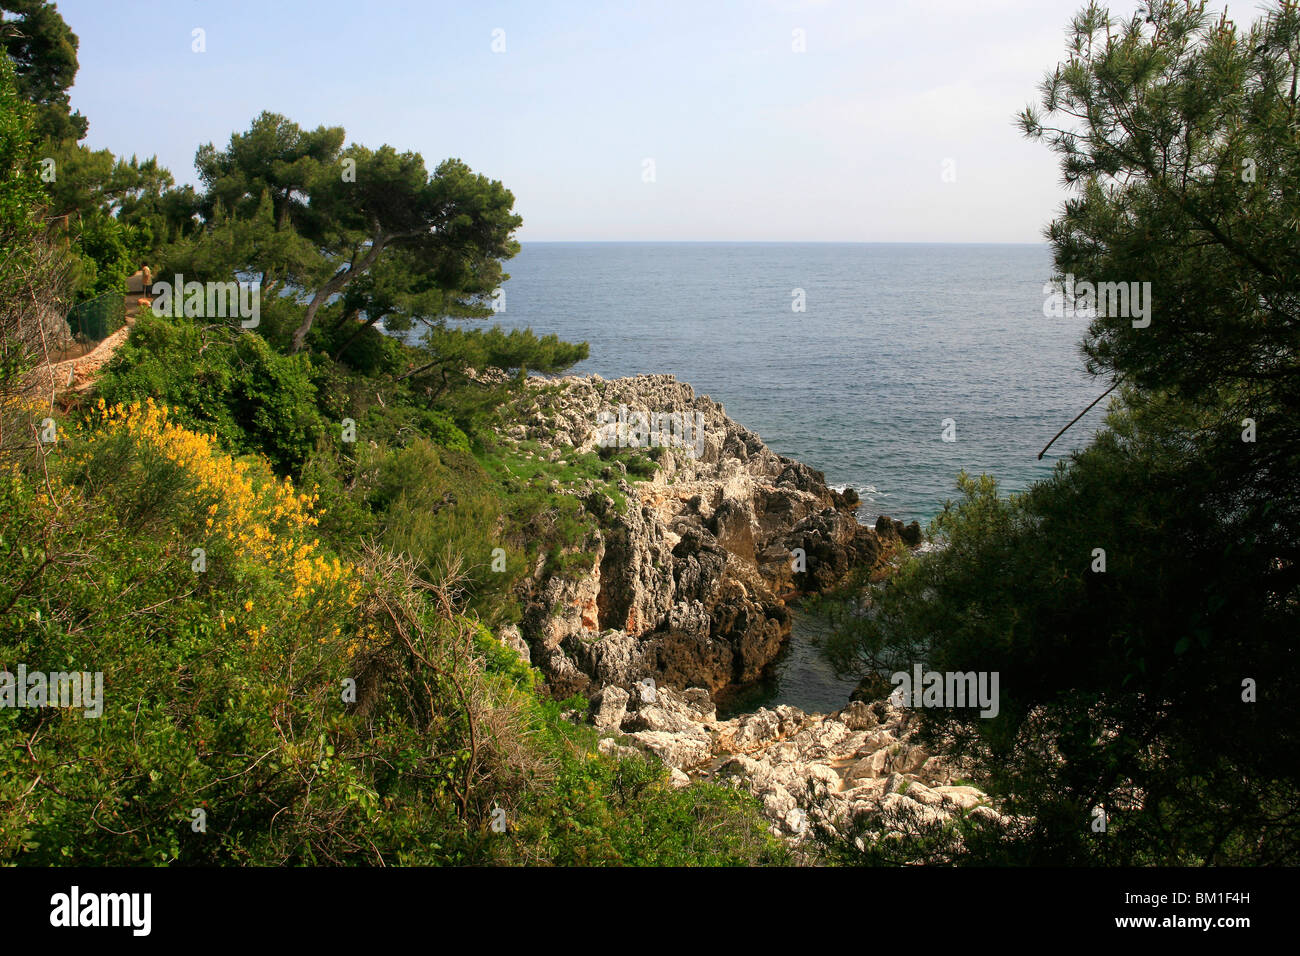 Pinus sp. and Spanish broom on the coast near Nice, France Stock Photo